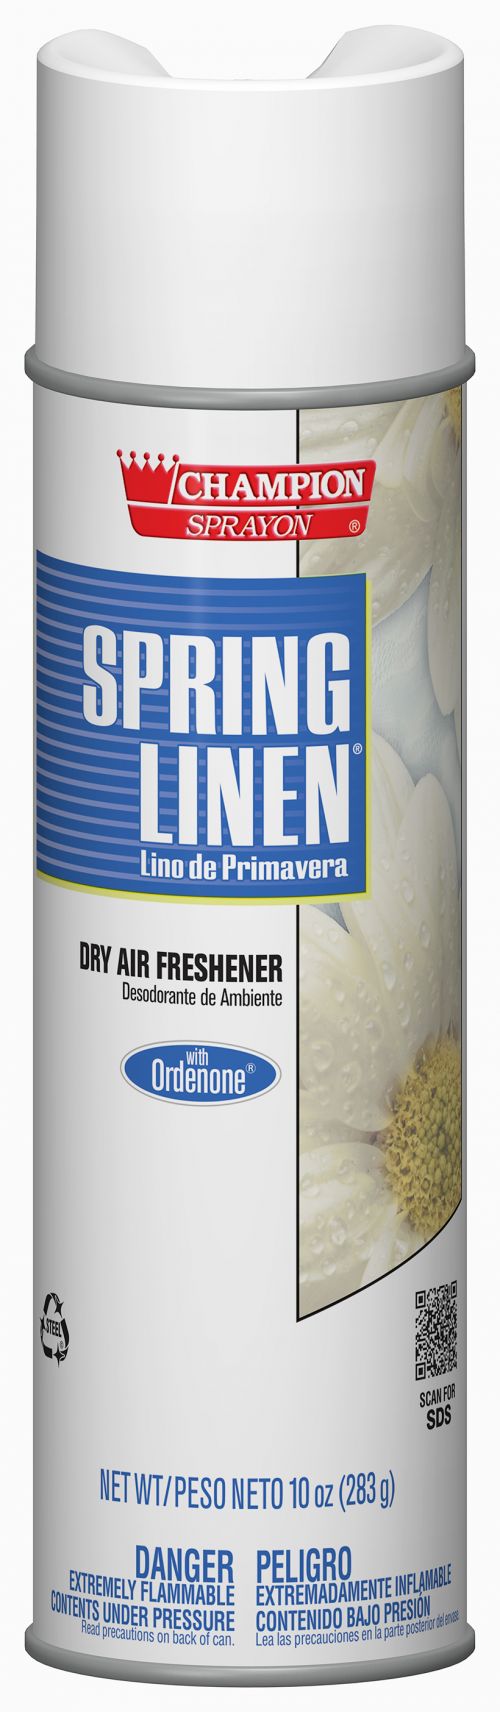 Dry Air Freshener